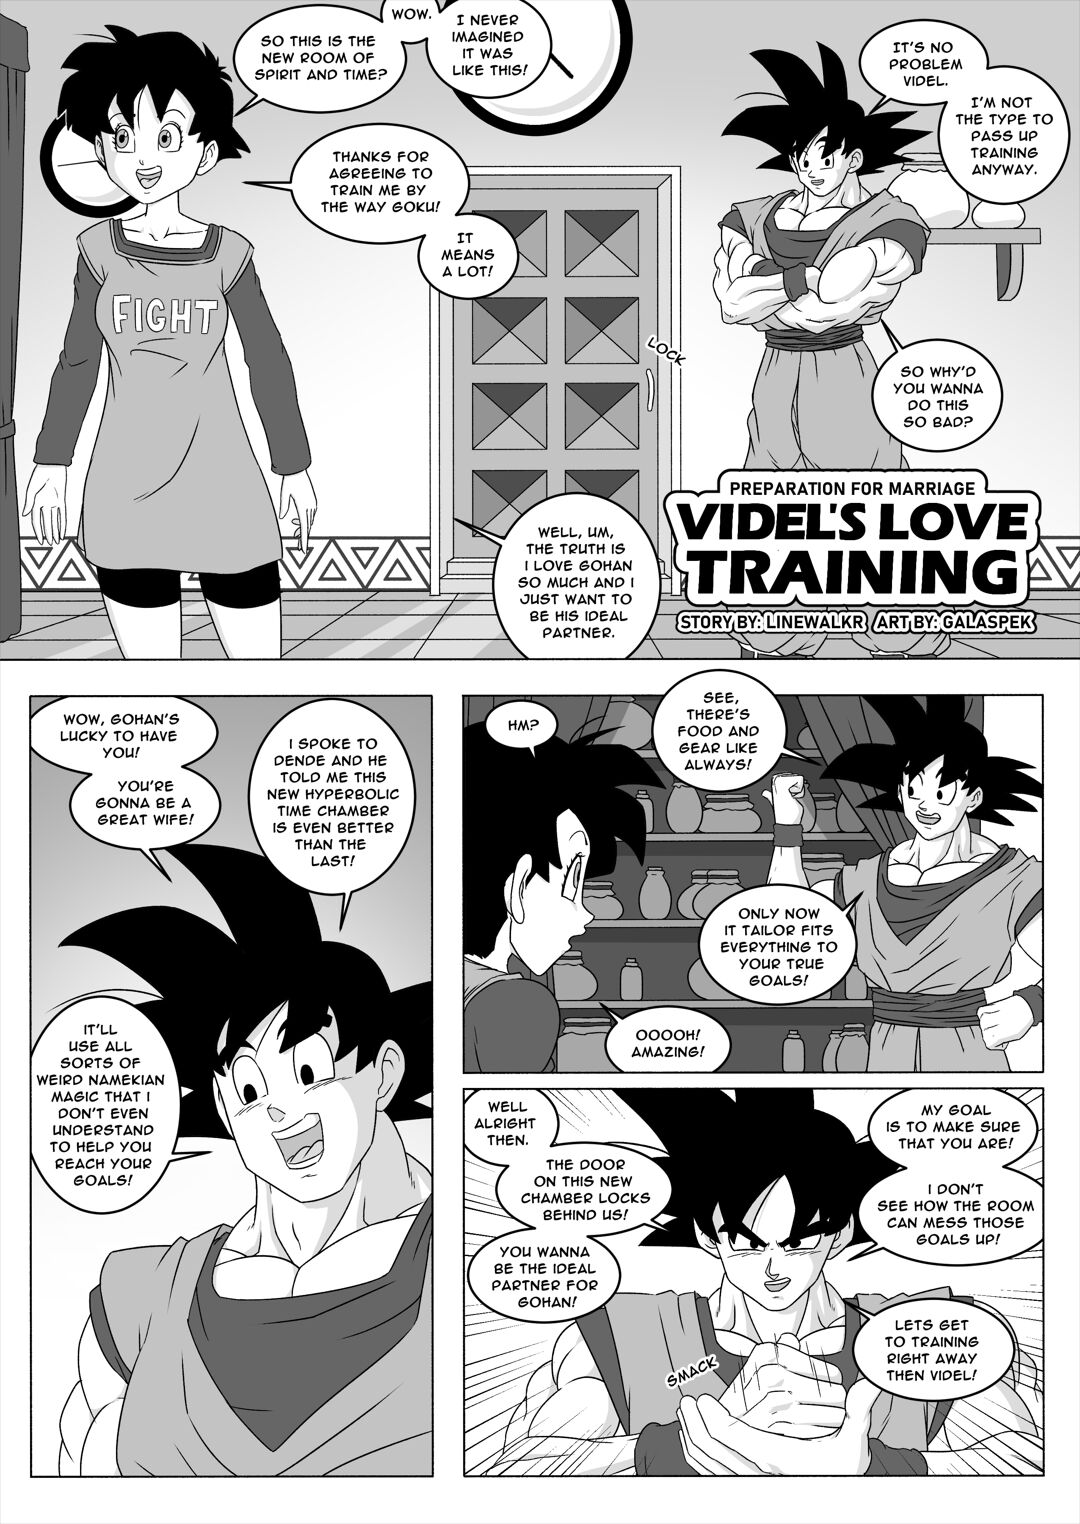 Videl’s Love Training – Dragon Ball Z by Galaspek